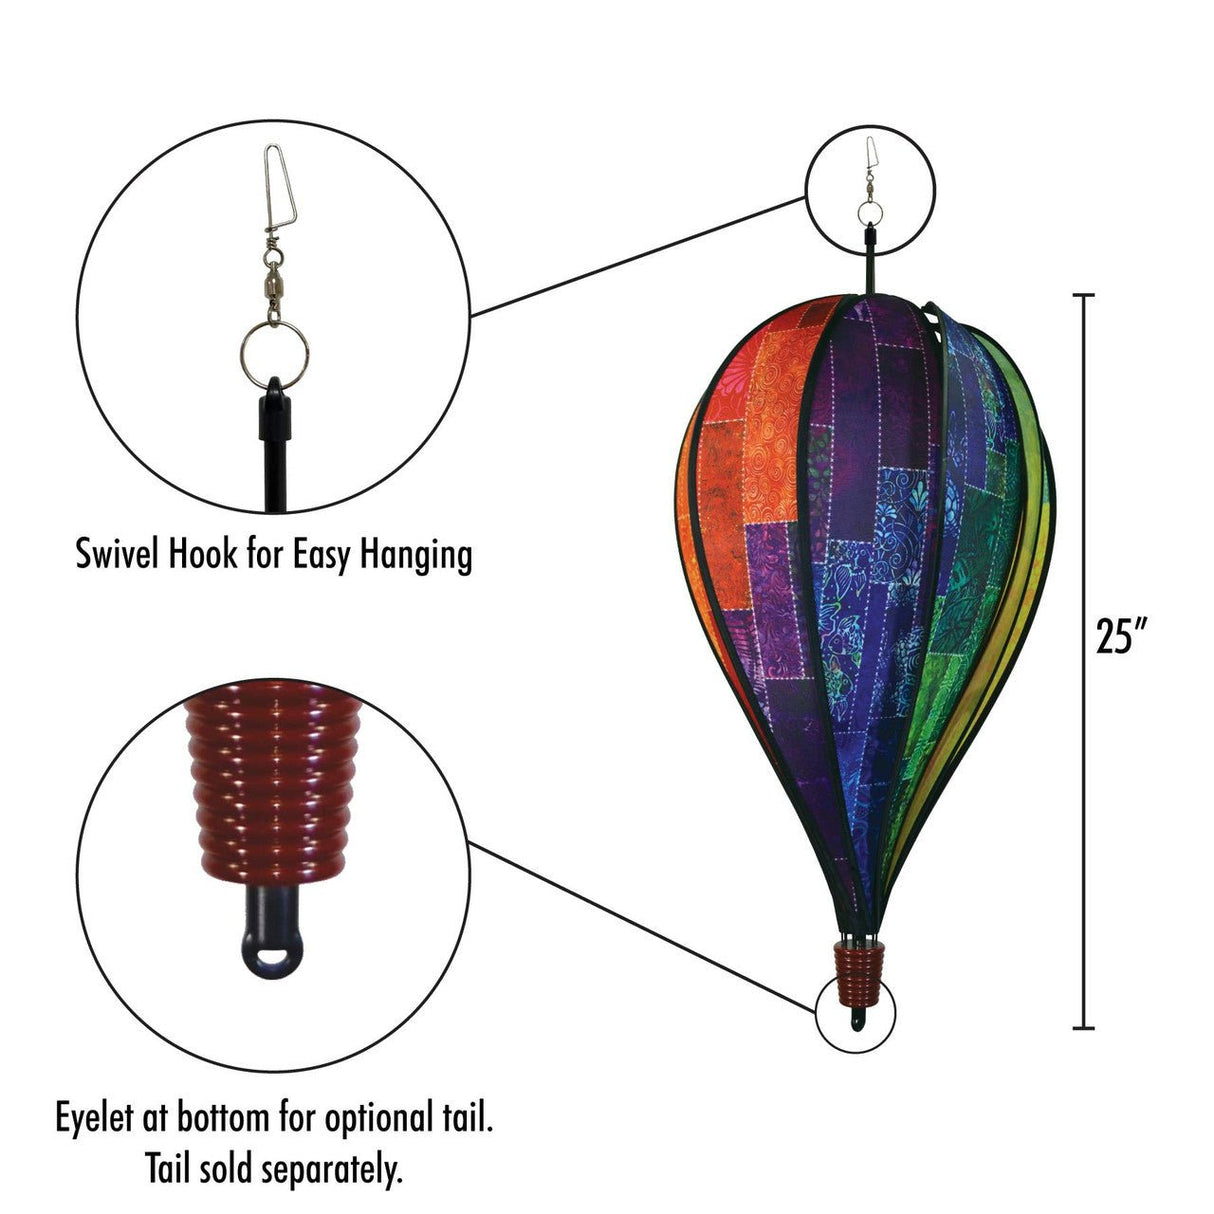 In The Breeze Batik Quilt Panel Hot Air Balloon Spinner 25" - JCS Wildlife